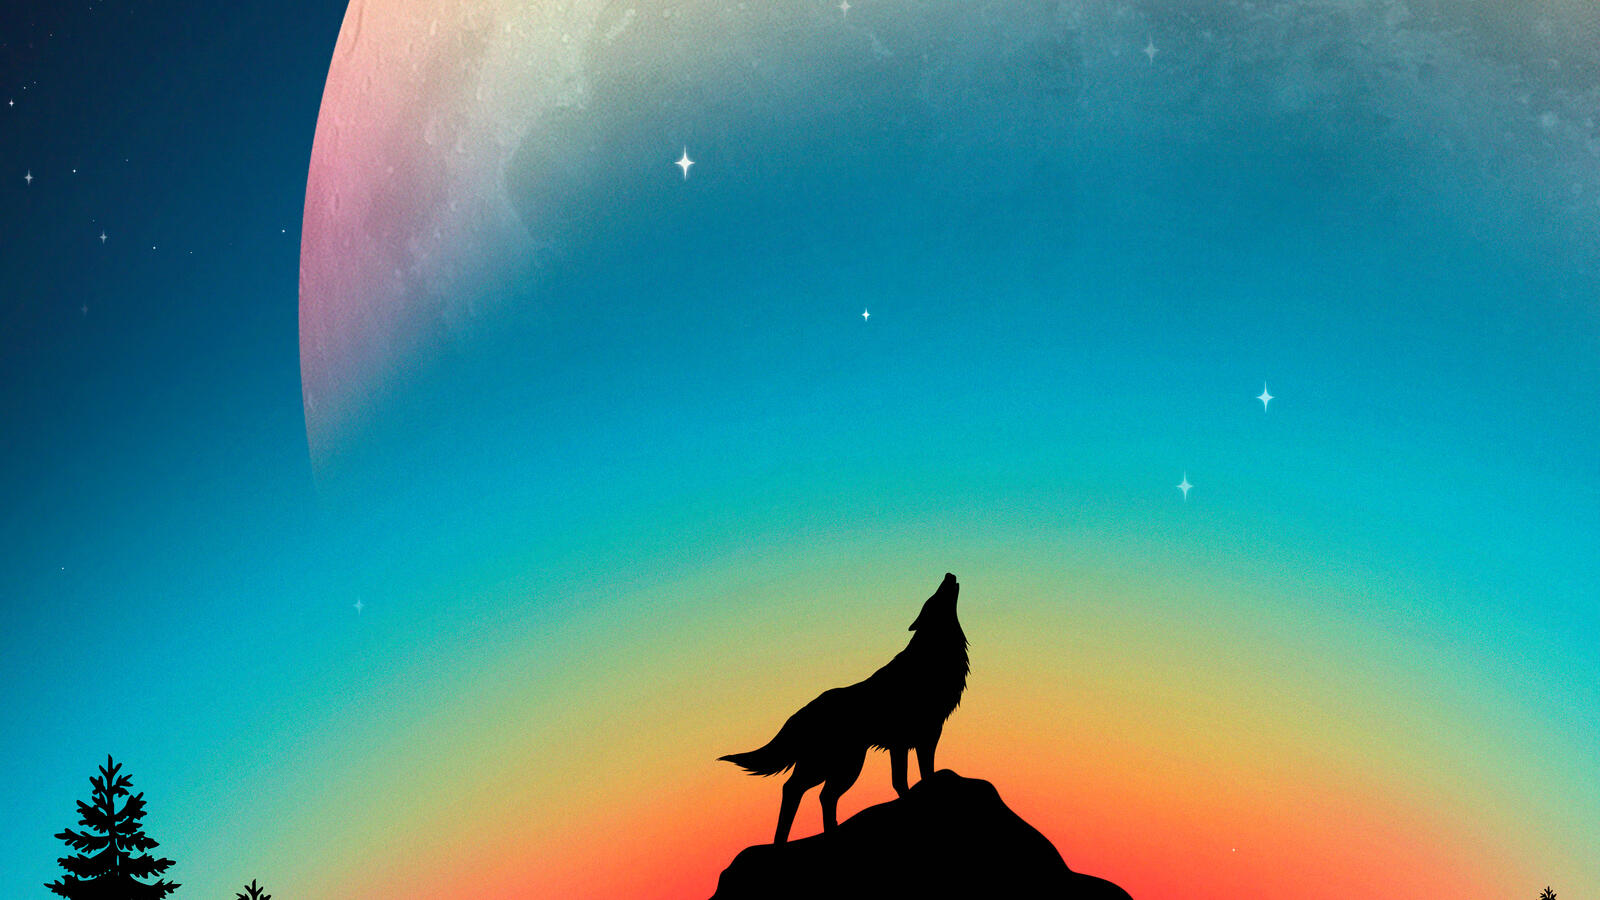 Бесплатное фото Силуэт волка на фоне цветного неба